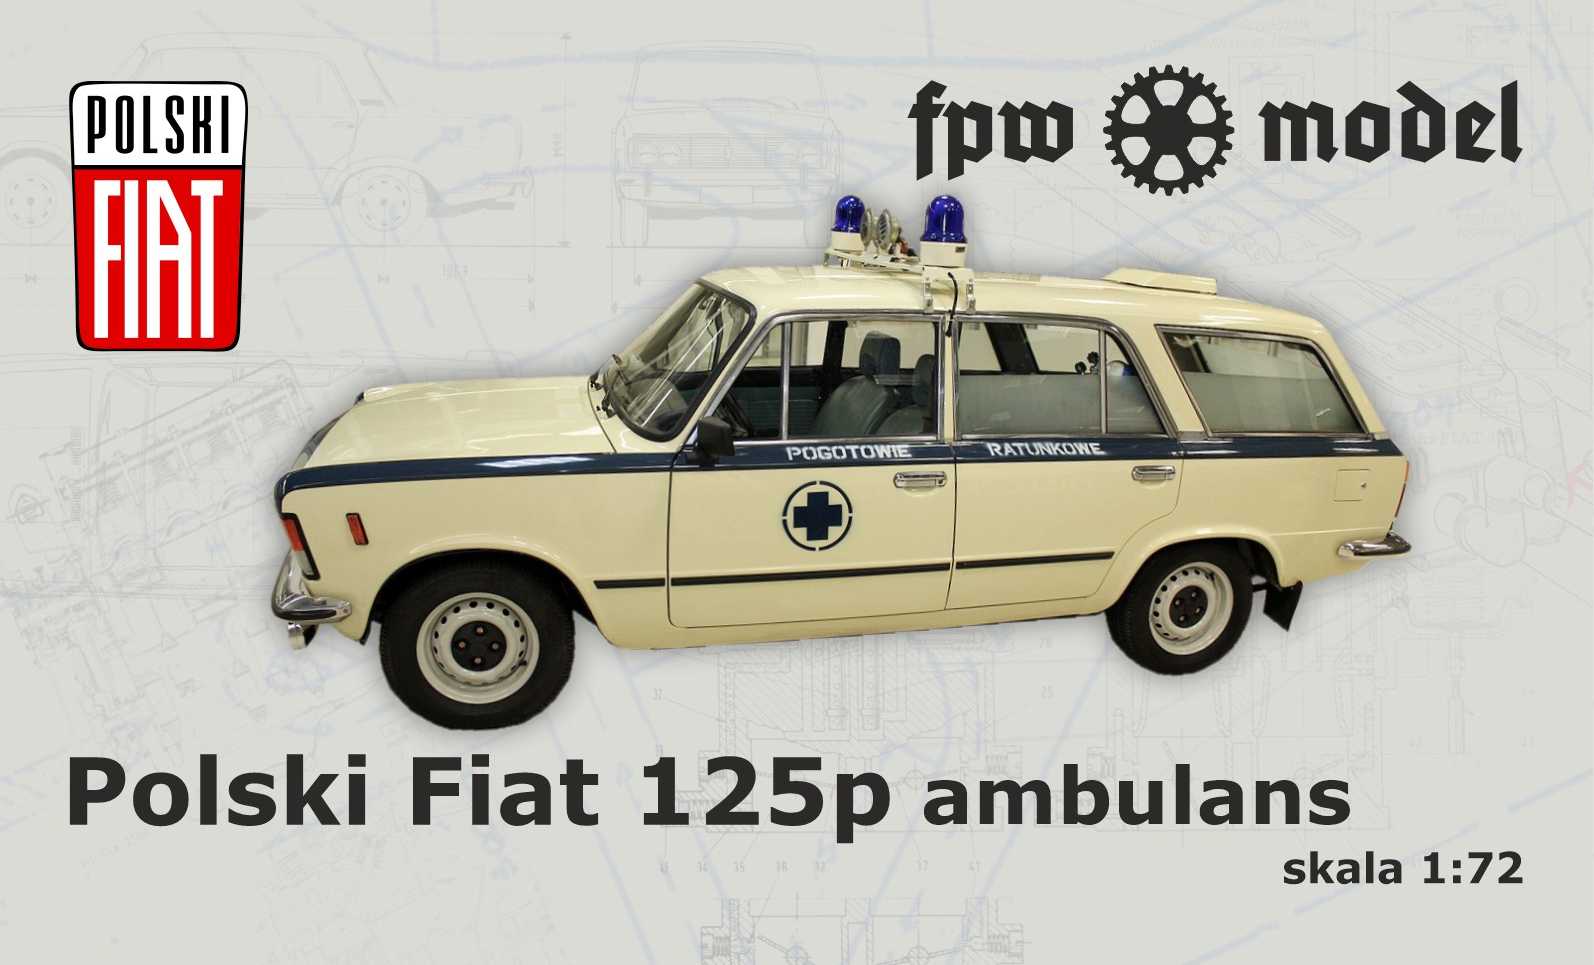 Polski Fiat 125p - kombi "ambulance"